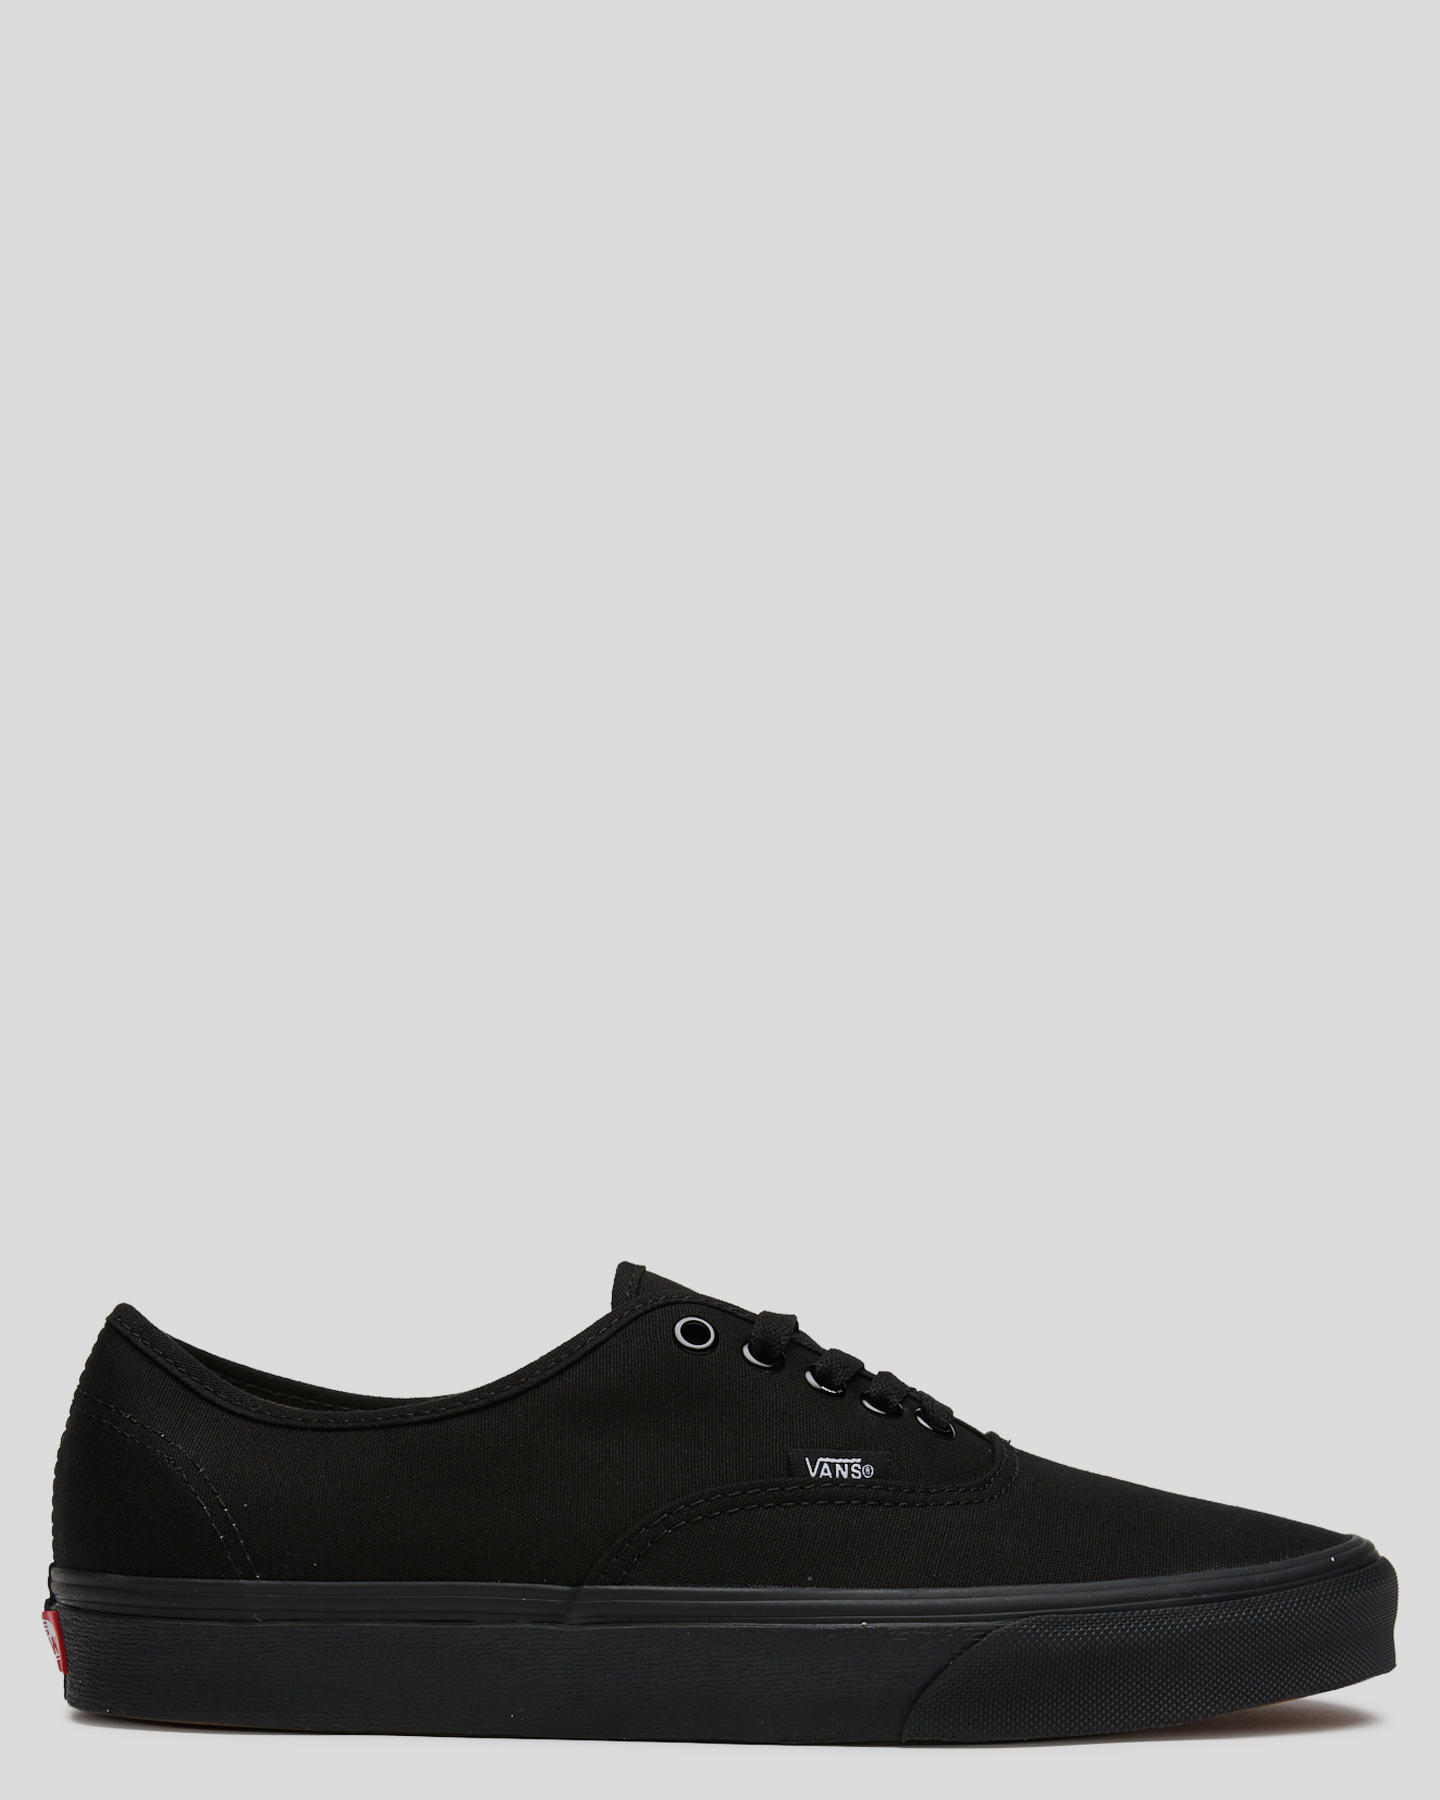 Vans Shoe - Black/Black | SurfStitch